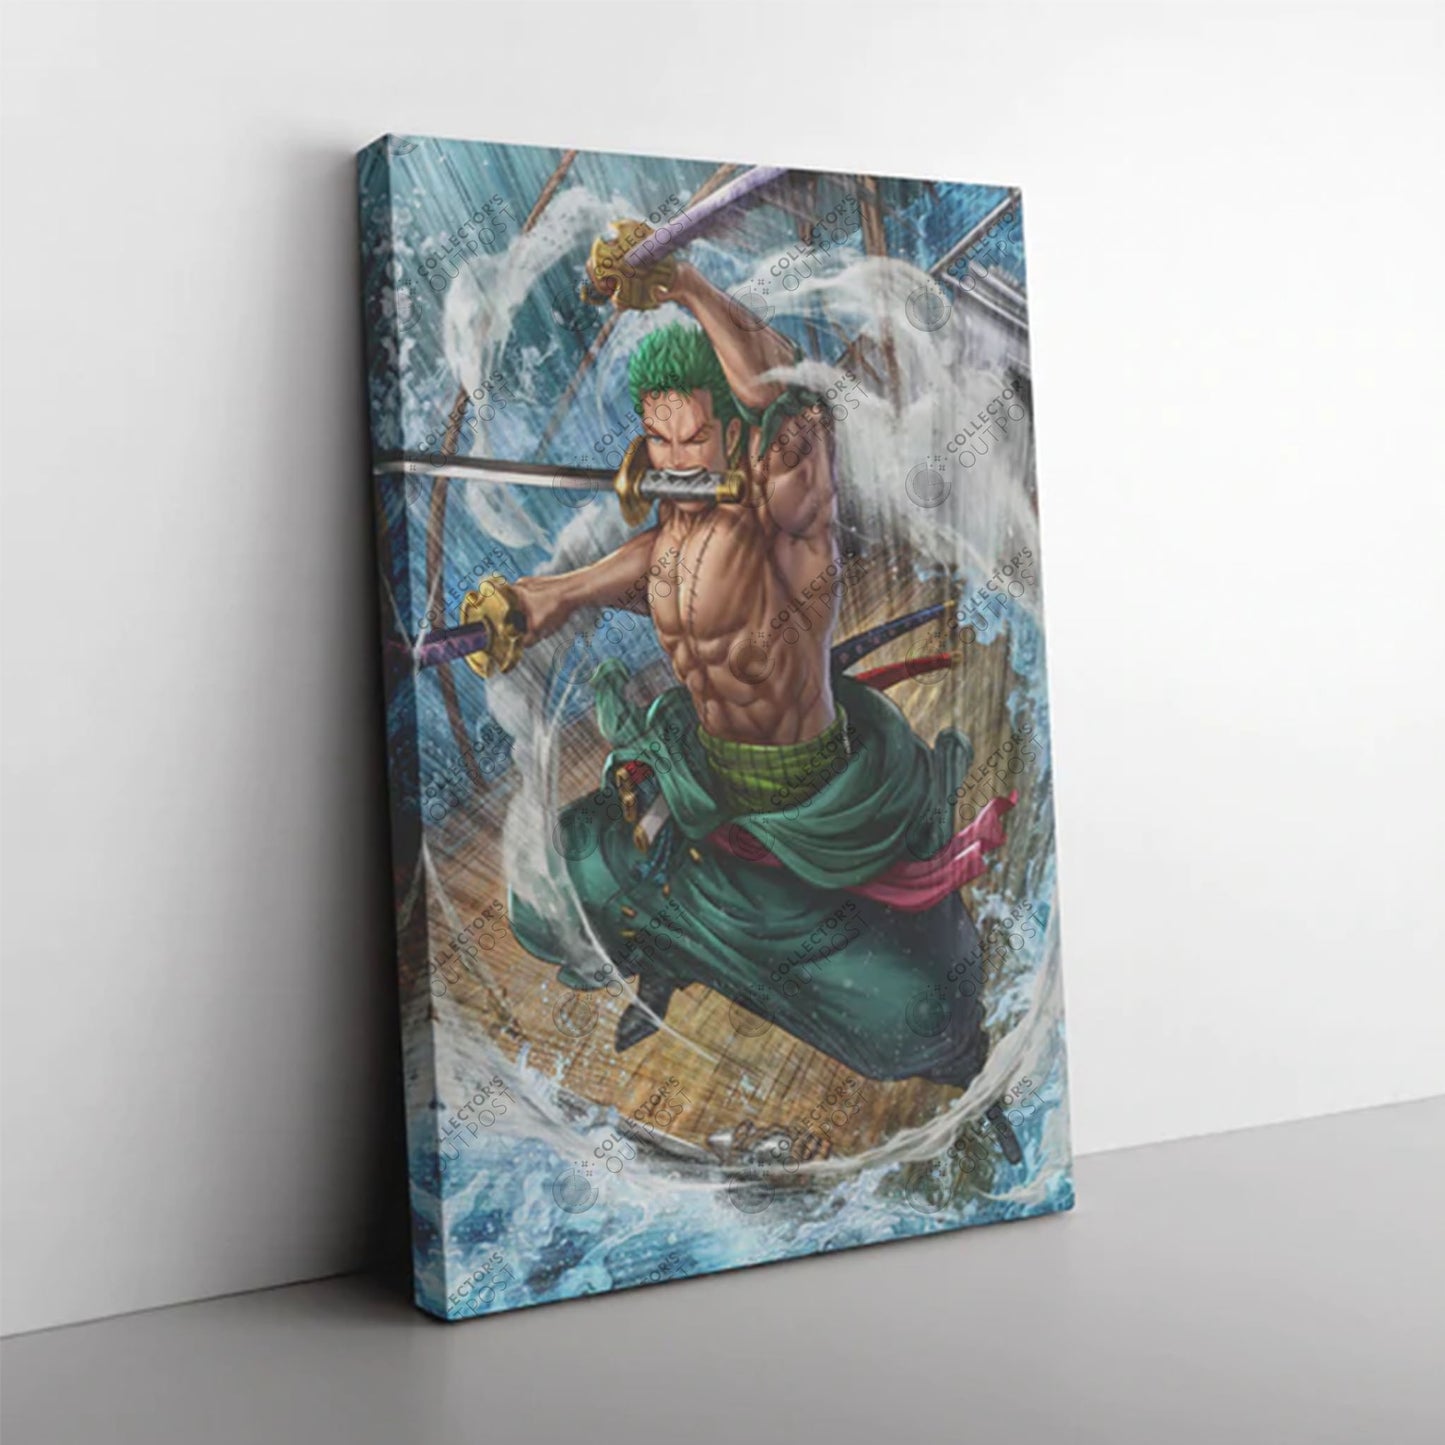 Greatest Swordsman (One Piece) Roronoa Zoro Premium Art Print